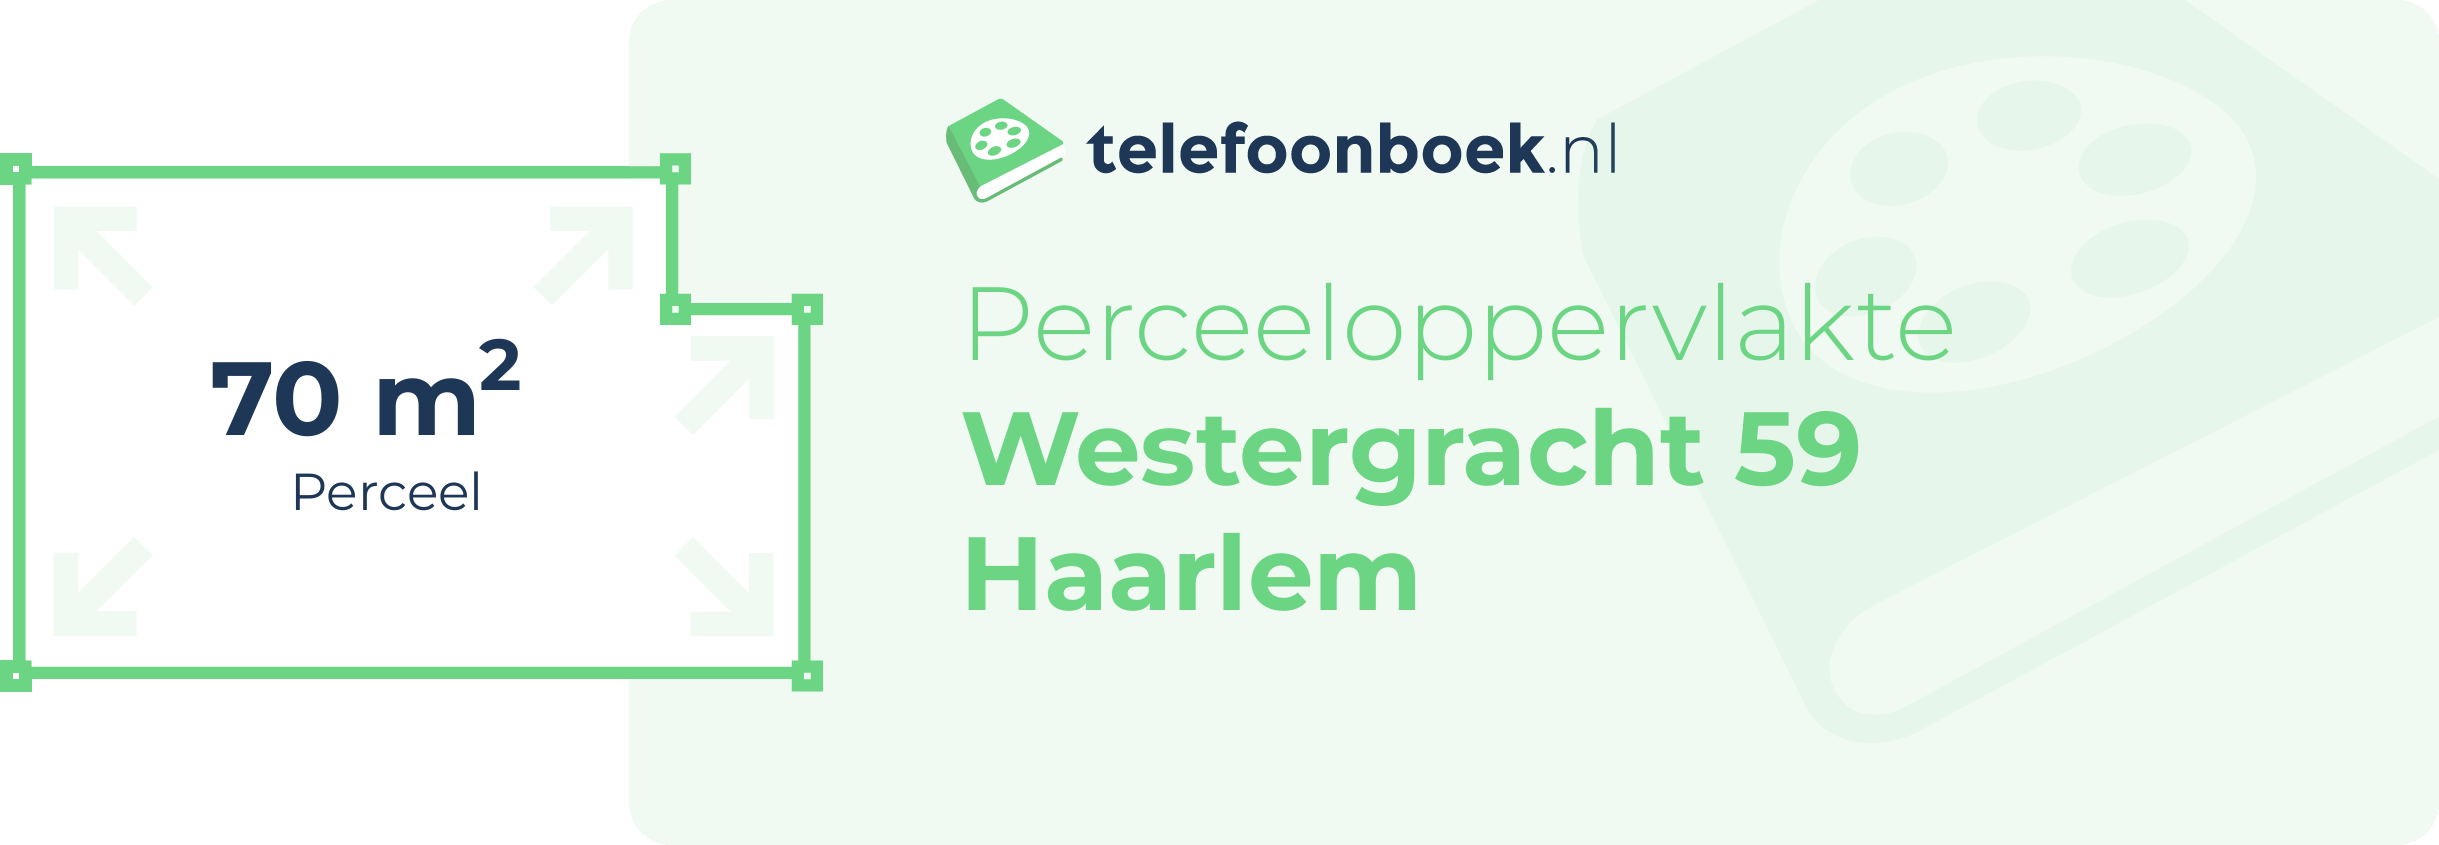 Perceeloppervlakte Westergracht 59 Haarlem